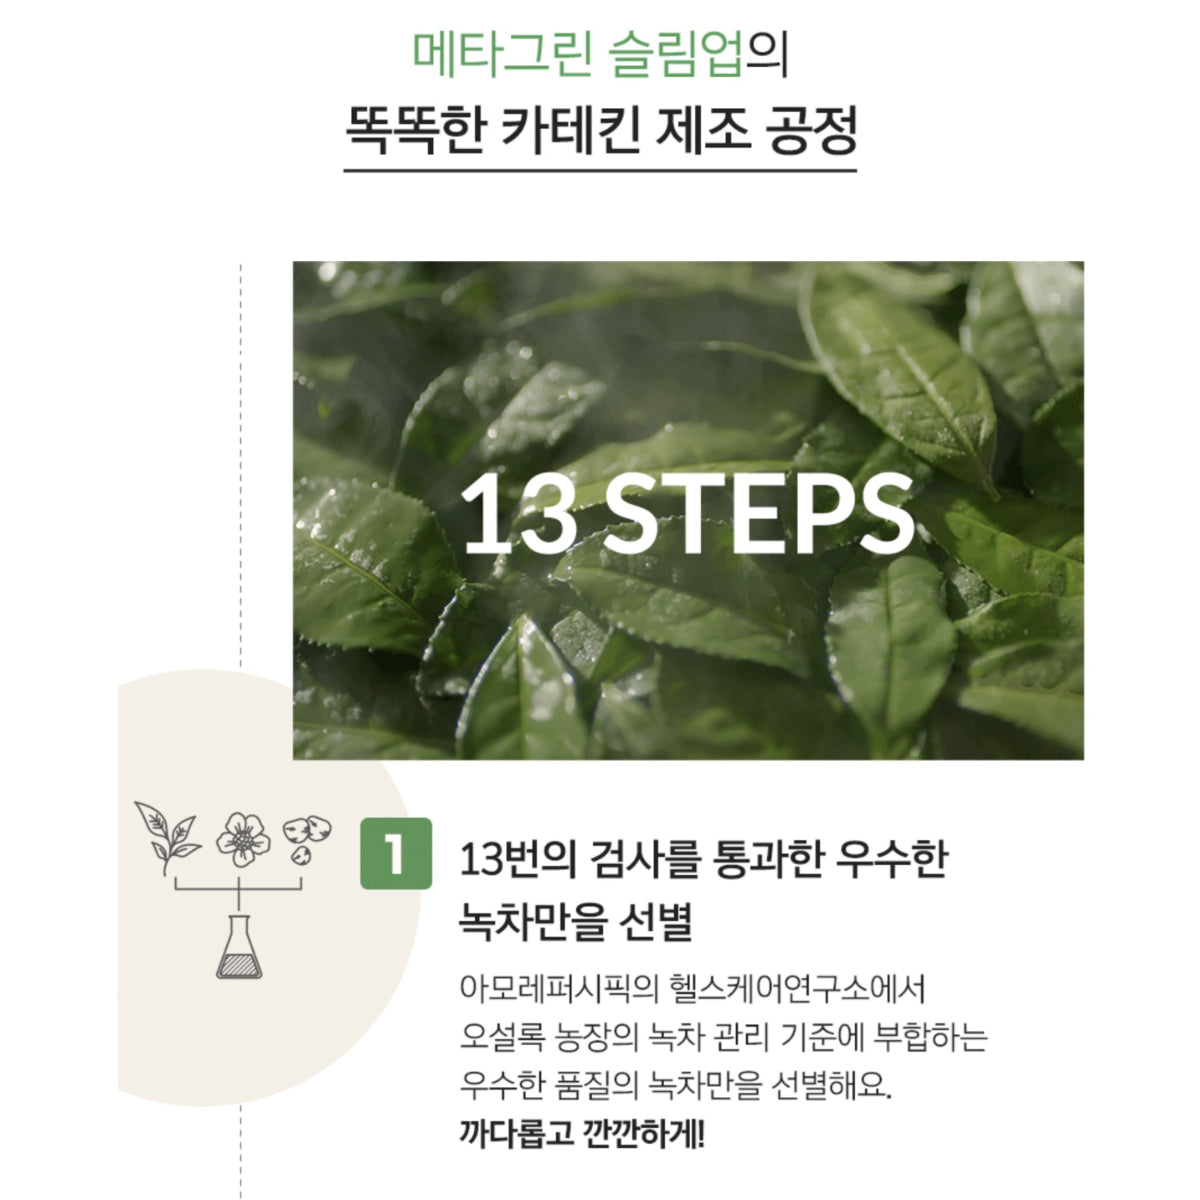 AMORE PACIFIC VITAL BEAUTIE Meta Green Slim Up Healthy Diet 90tabs/Bottle Green Tea Catechin Diet Pantothenic Acid Vitamin C / from Seoul, Korea